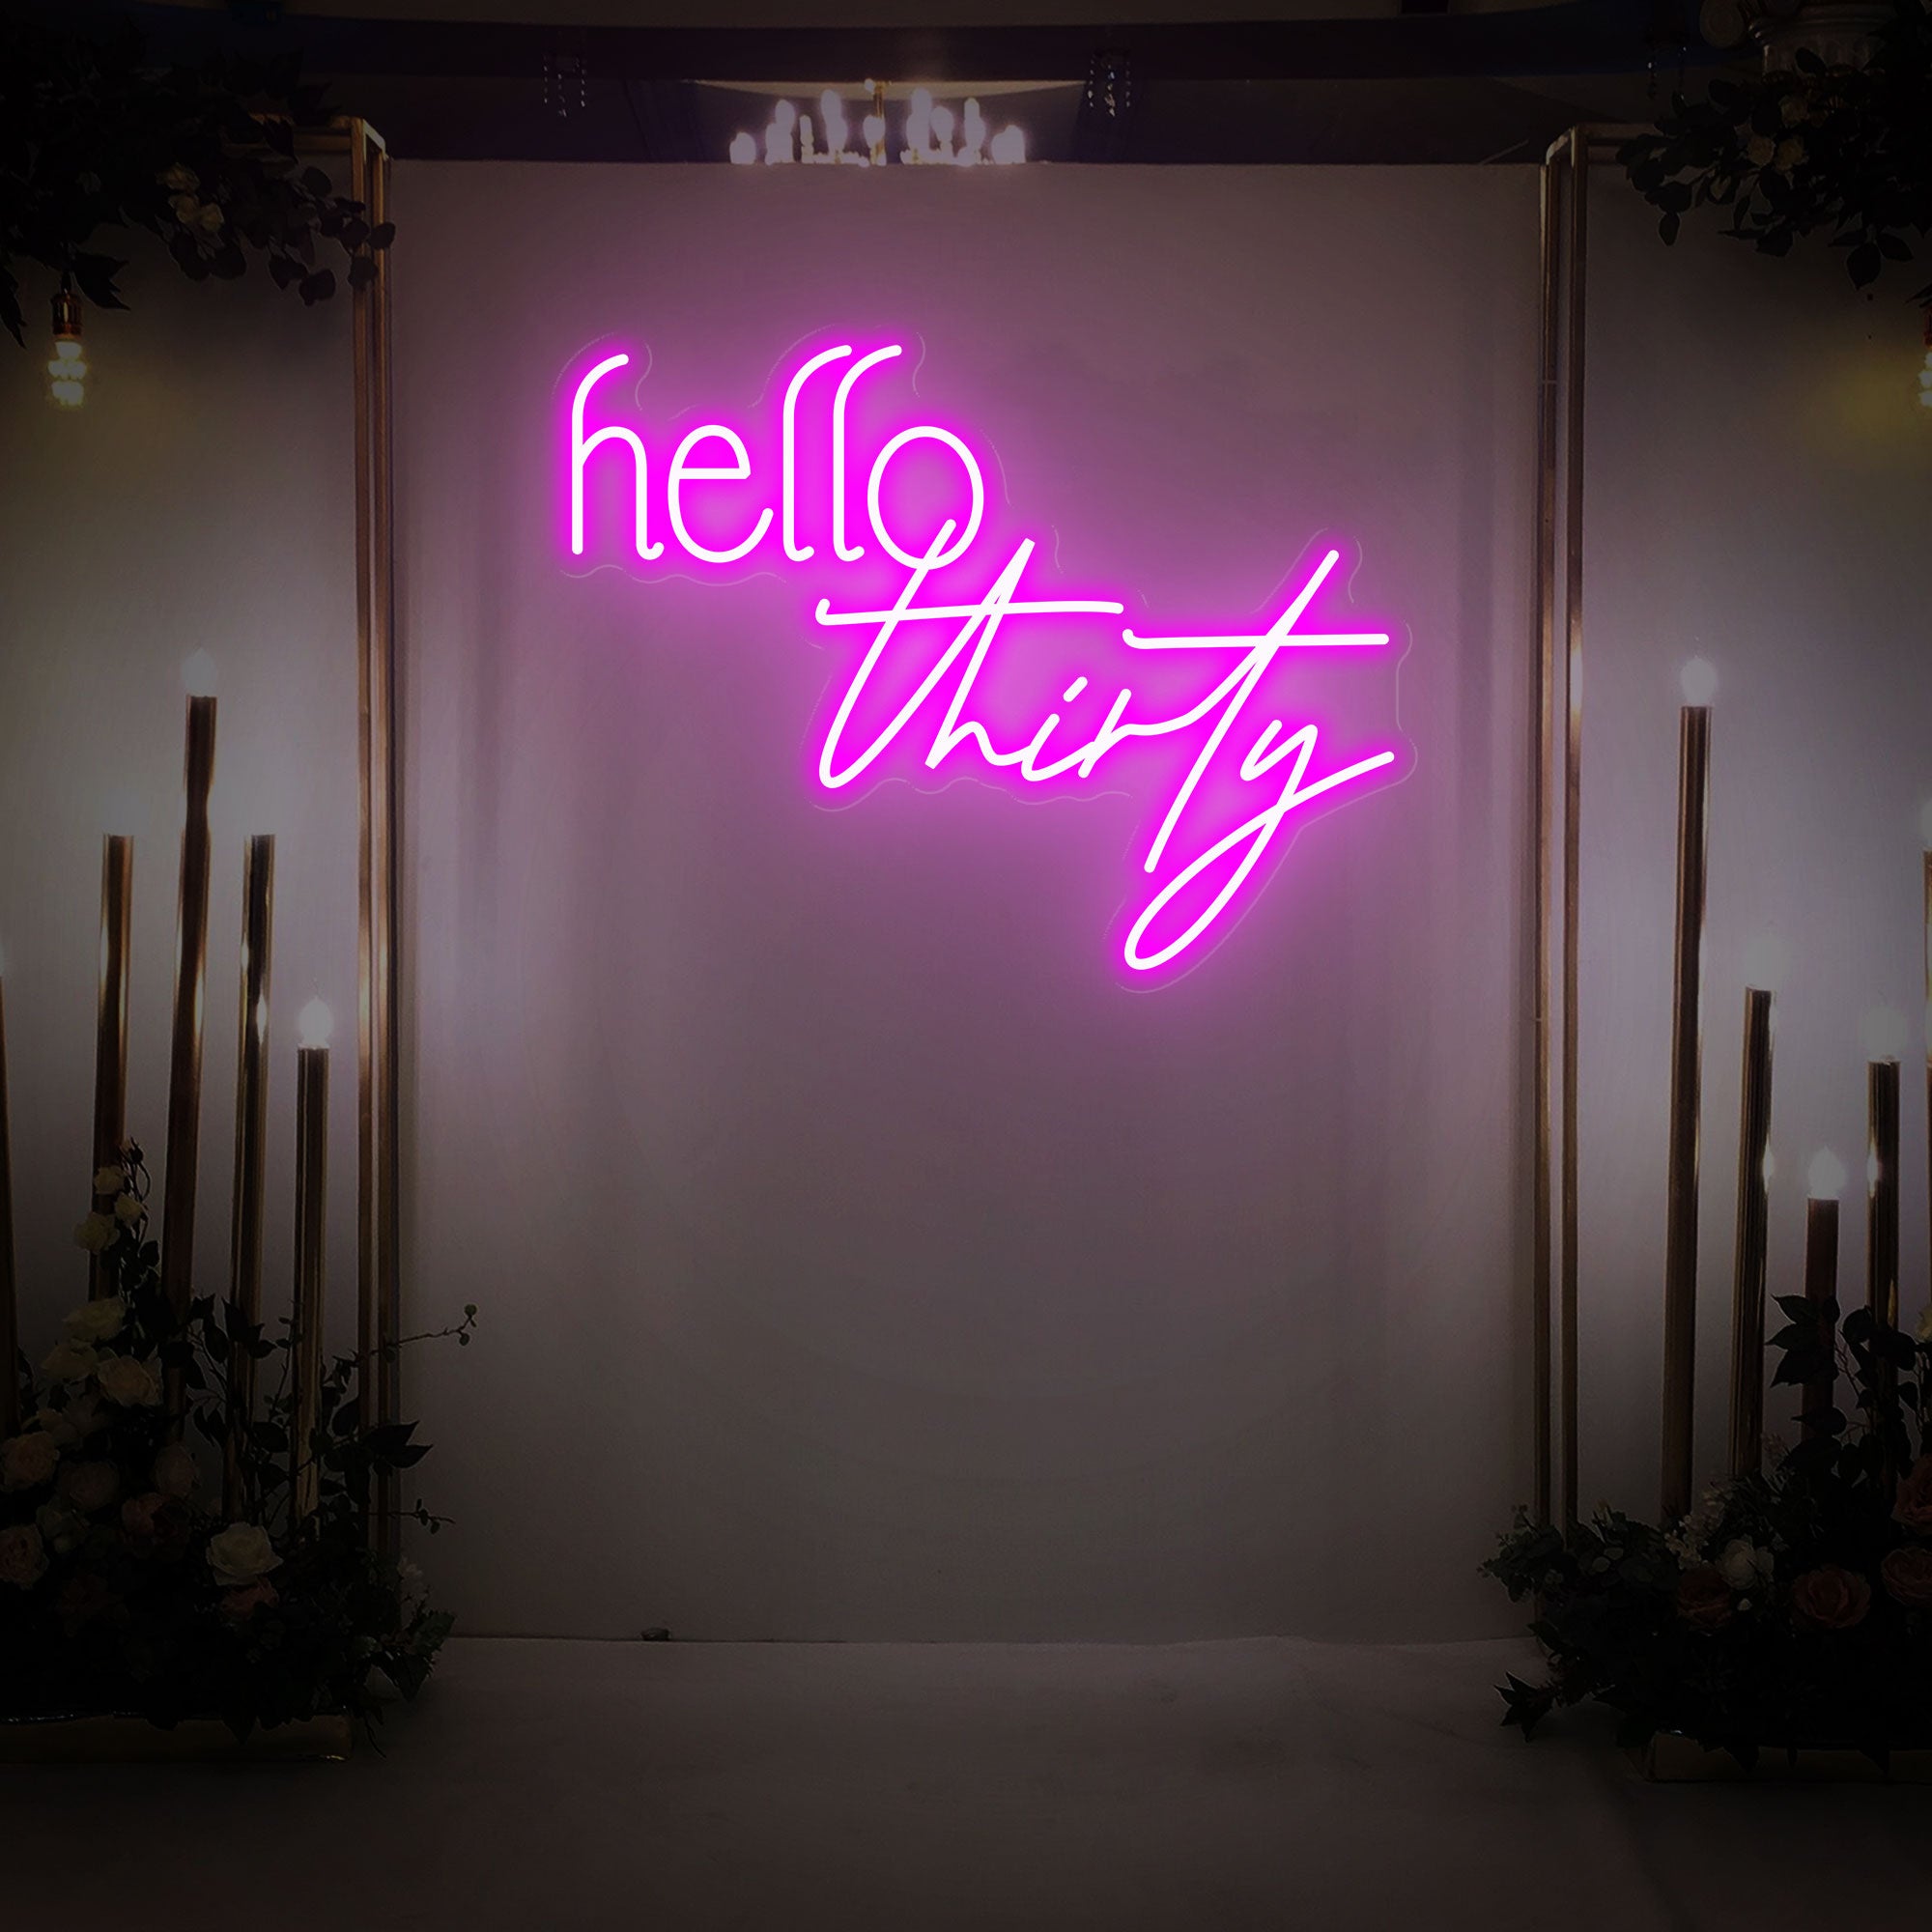 Hello Thirty Neon Sign